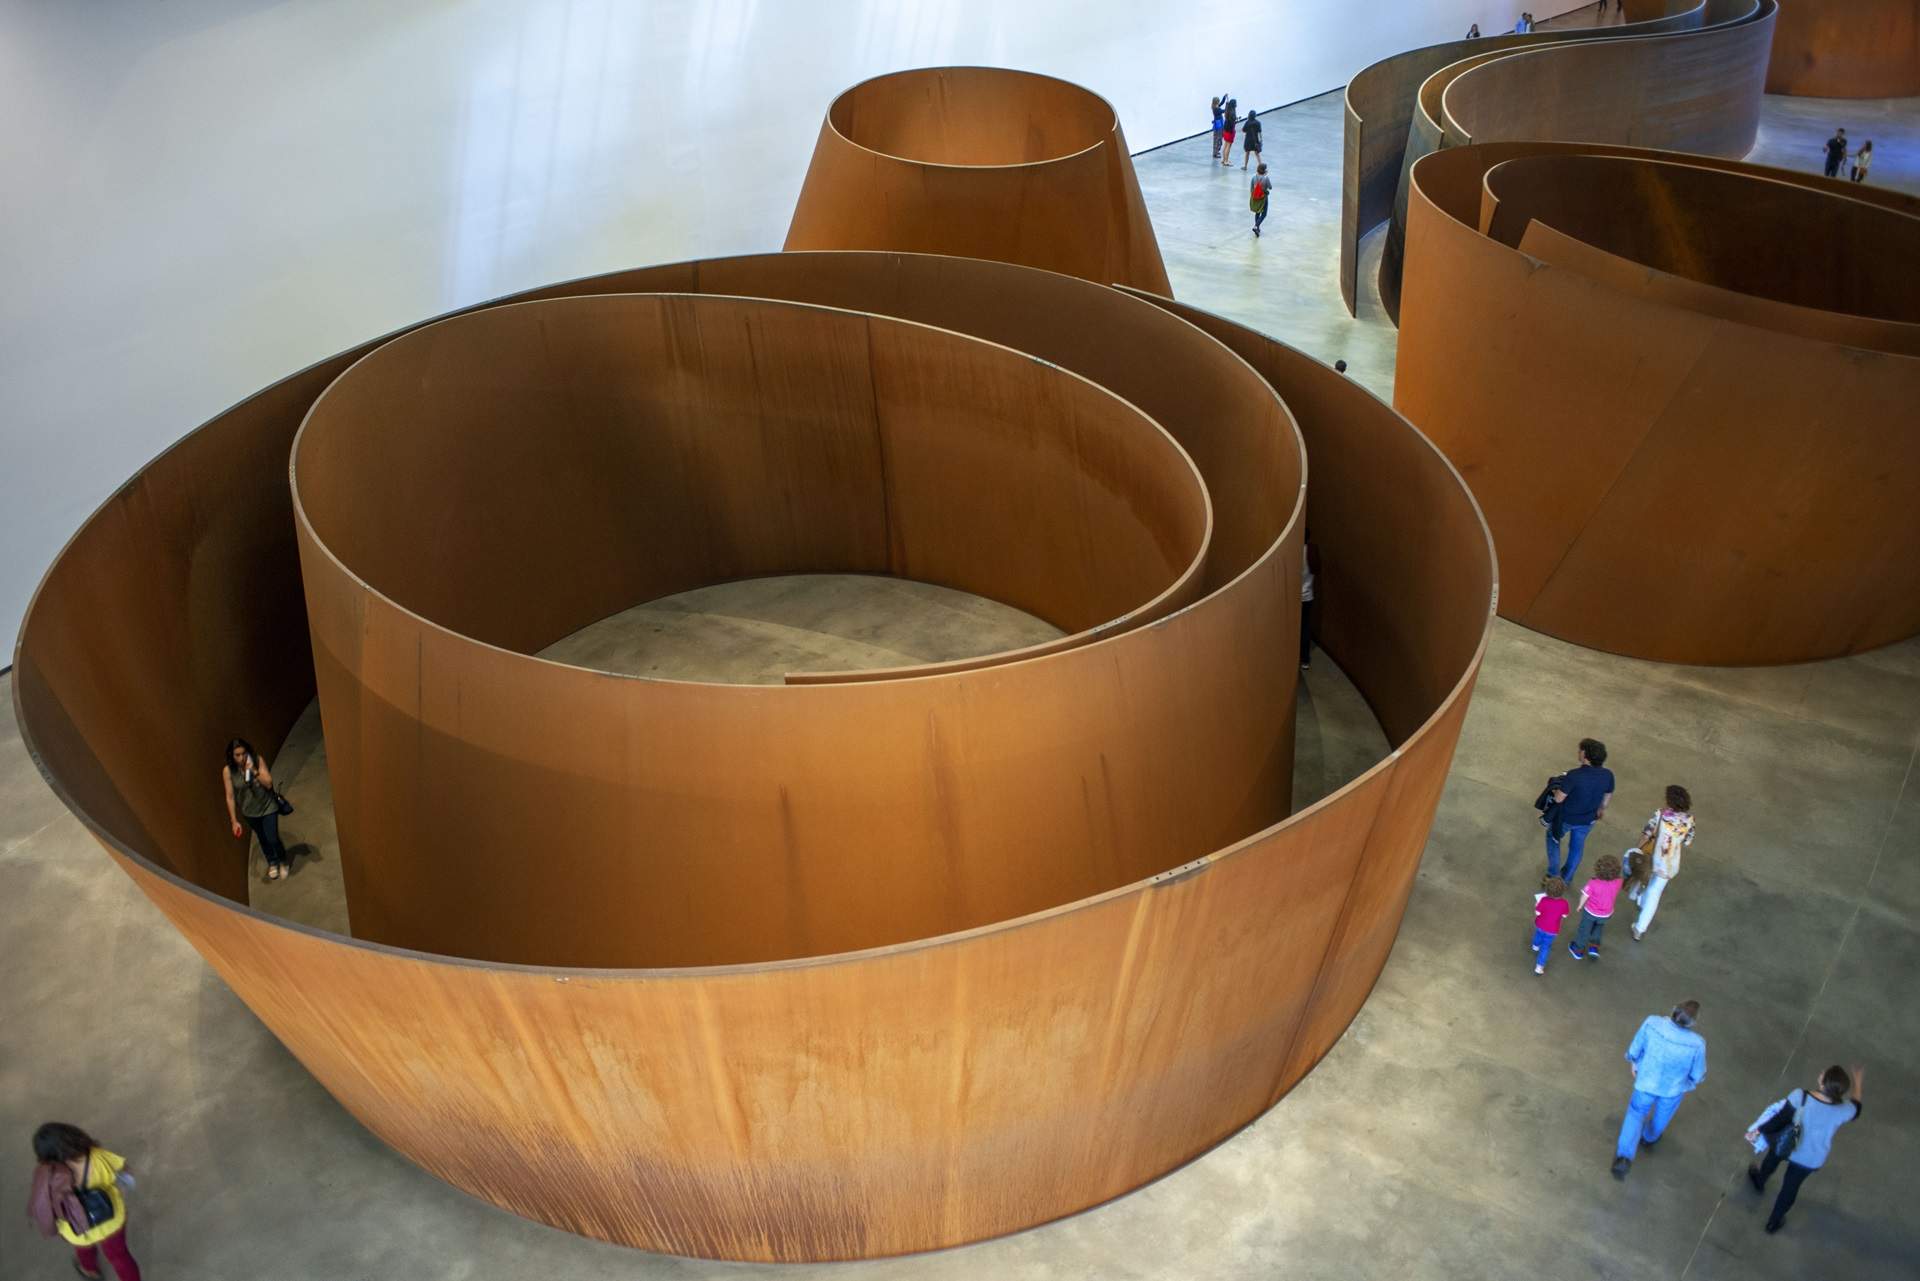 Obra materia del tiempo de Richard Serra en el museo Guggenhein de Bilbao / Europa Press